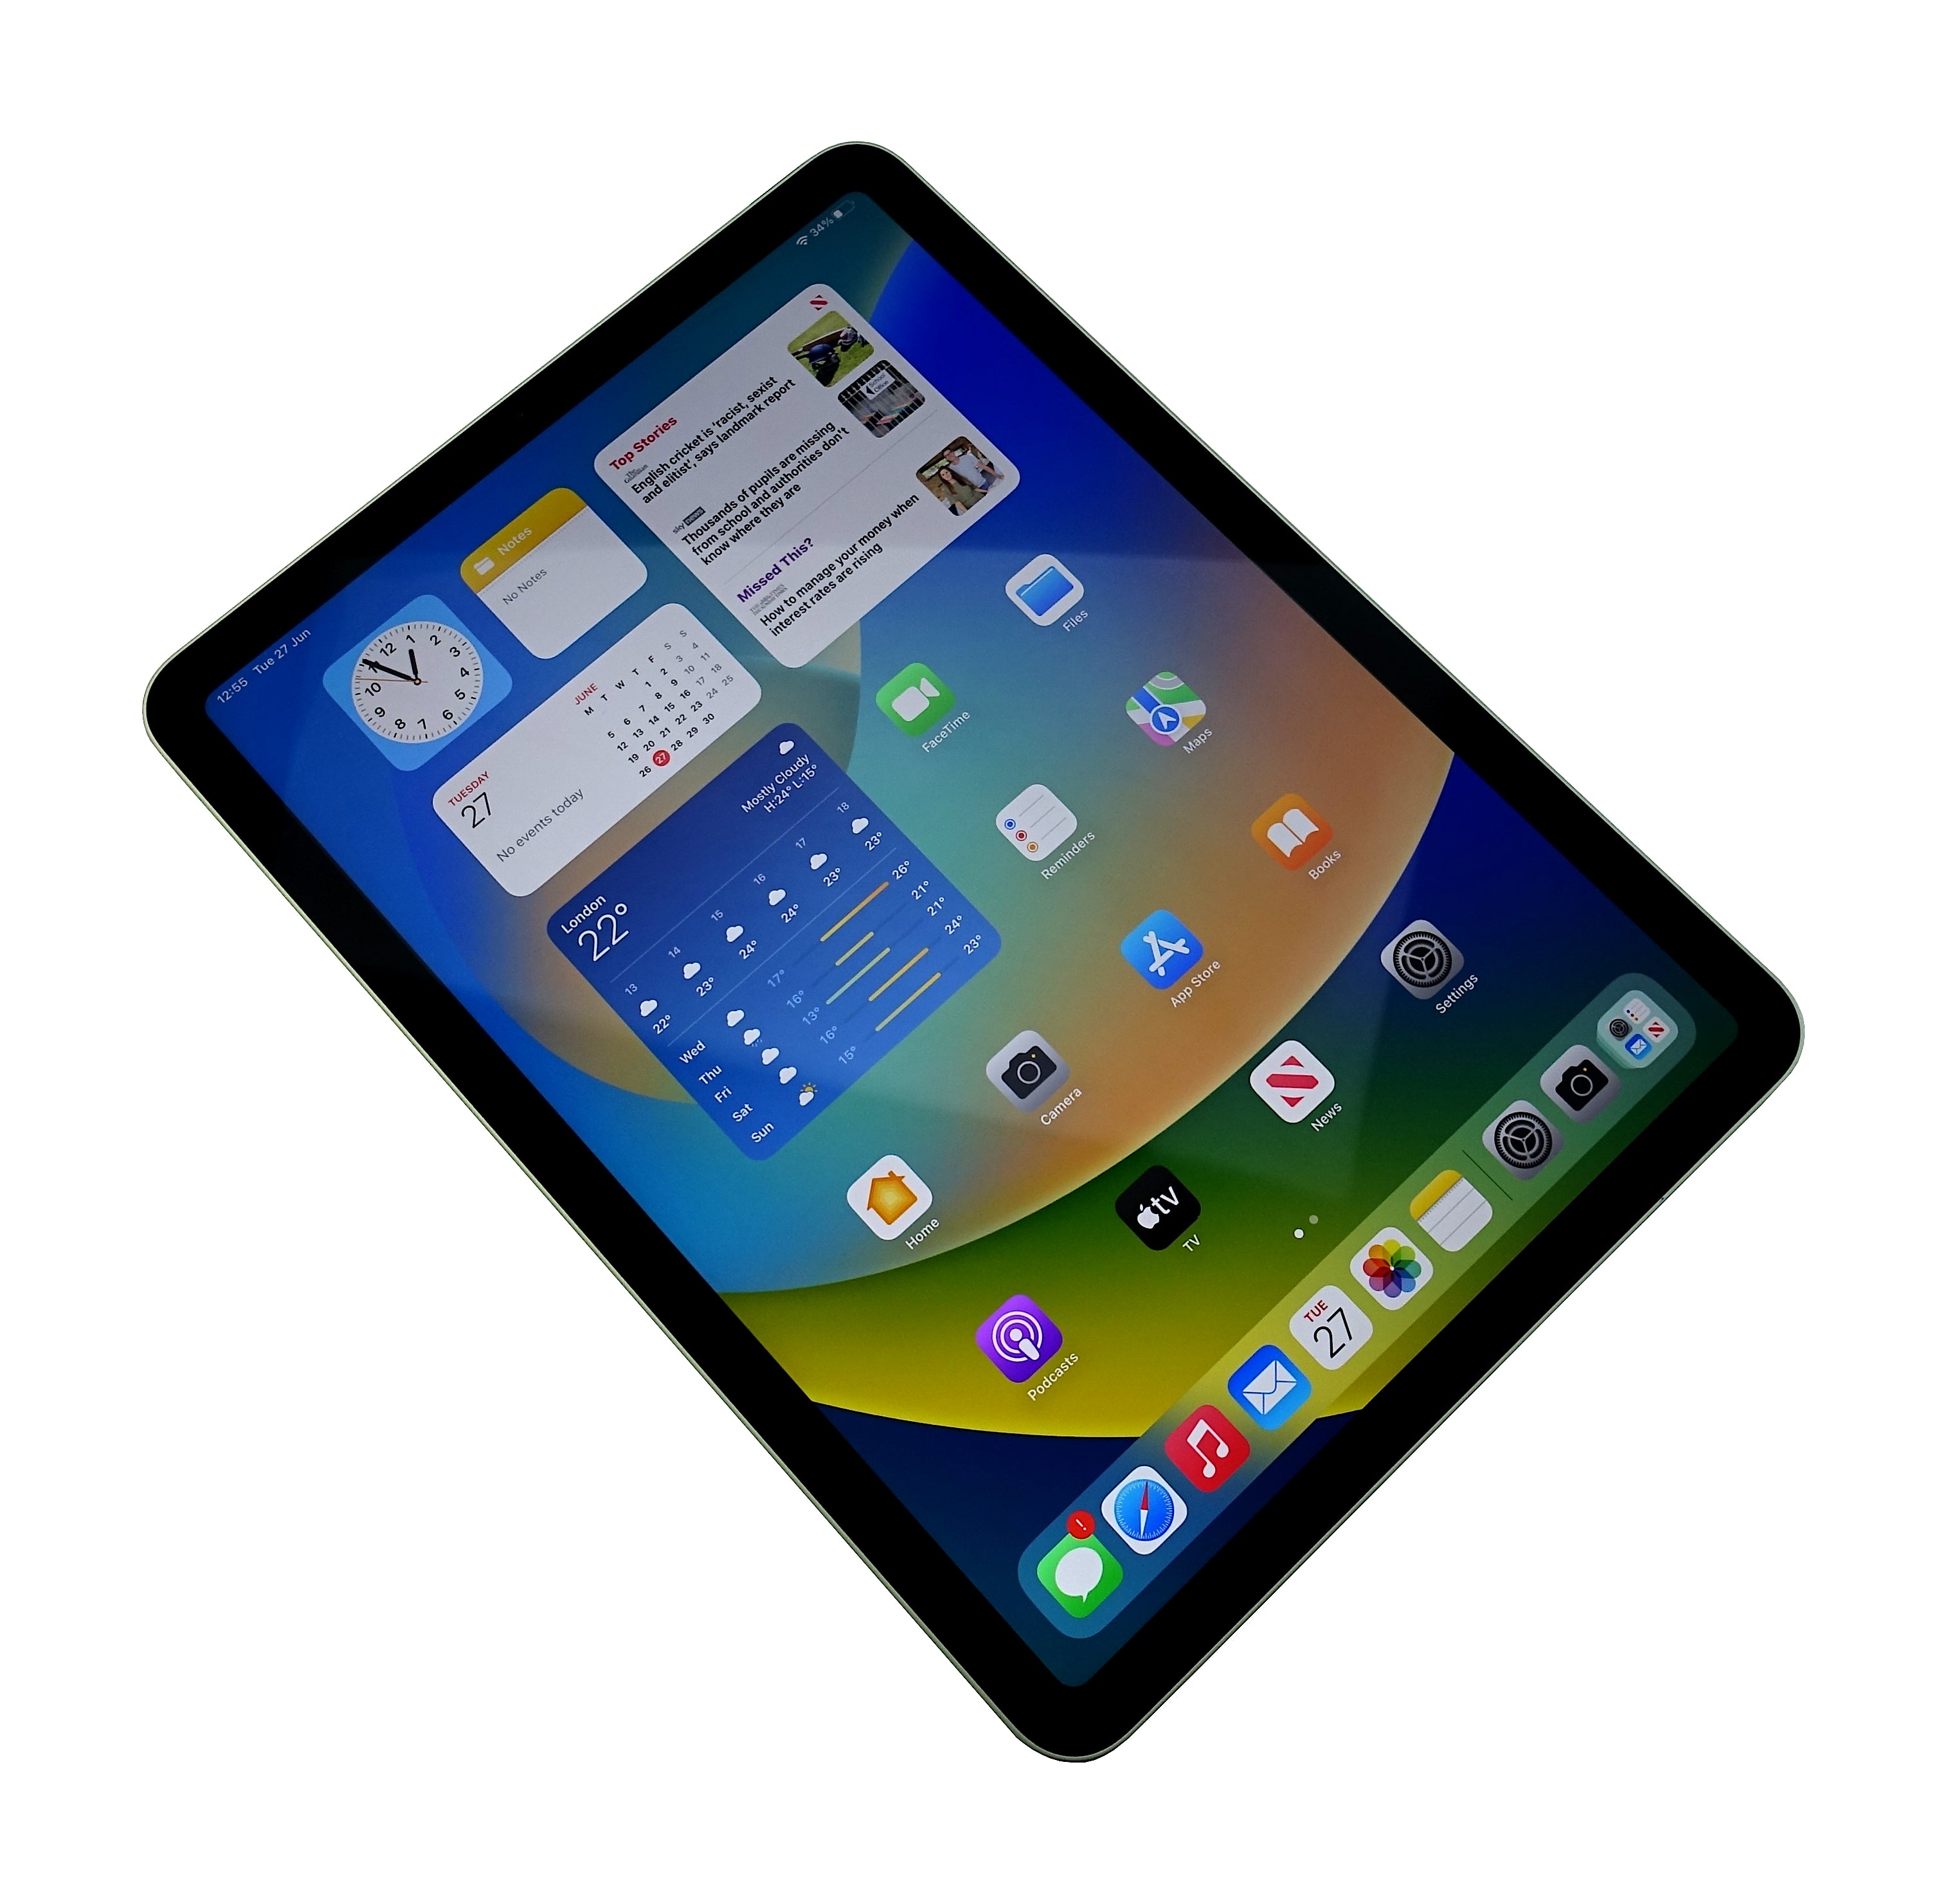 Apple iPad Air 4th Generation Tablet, 10.9", 64GB, WiFi, Green, A2316